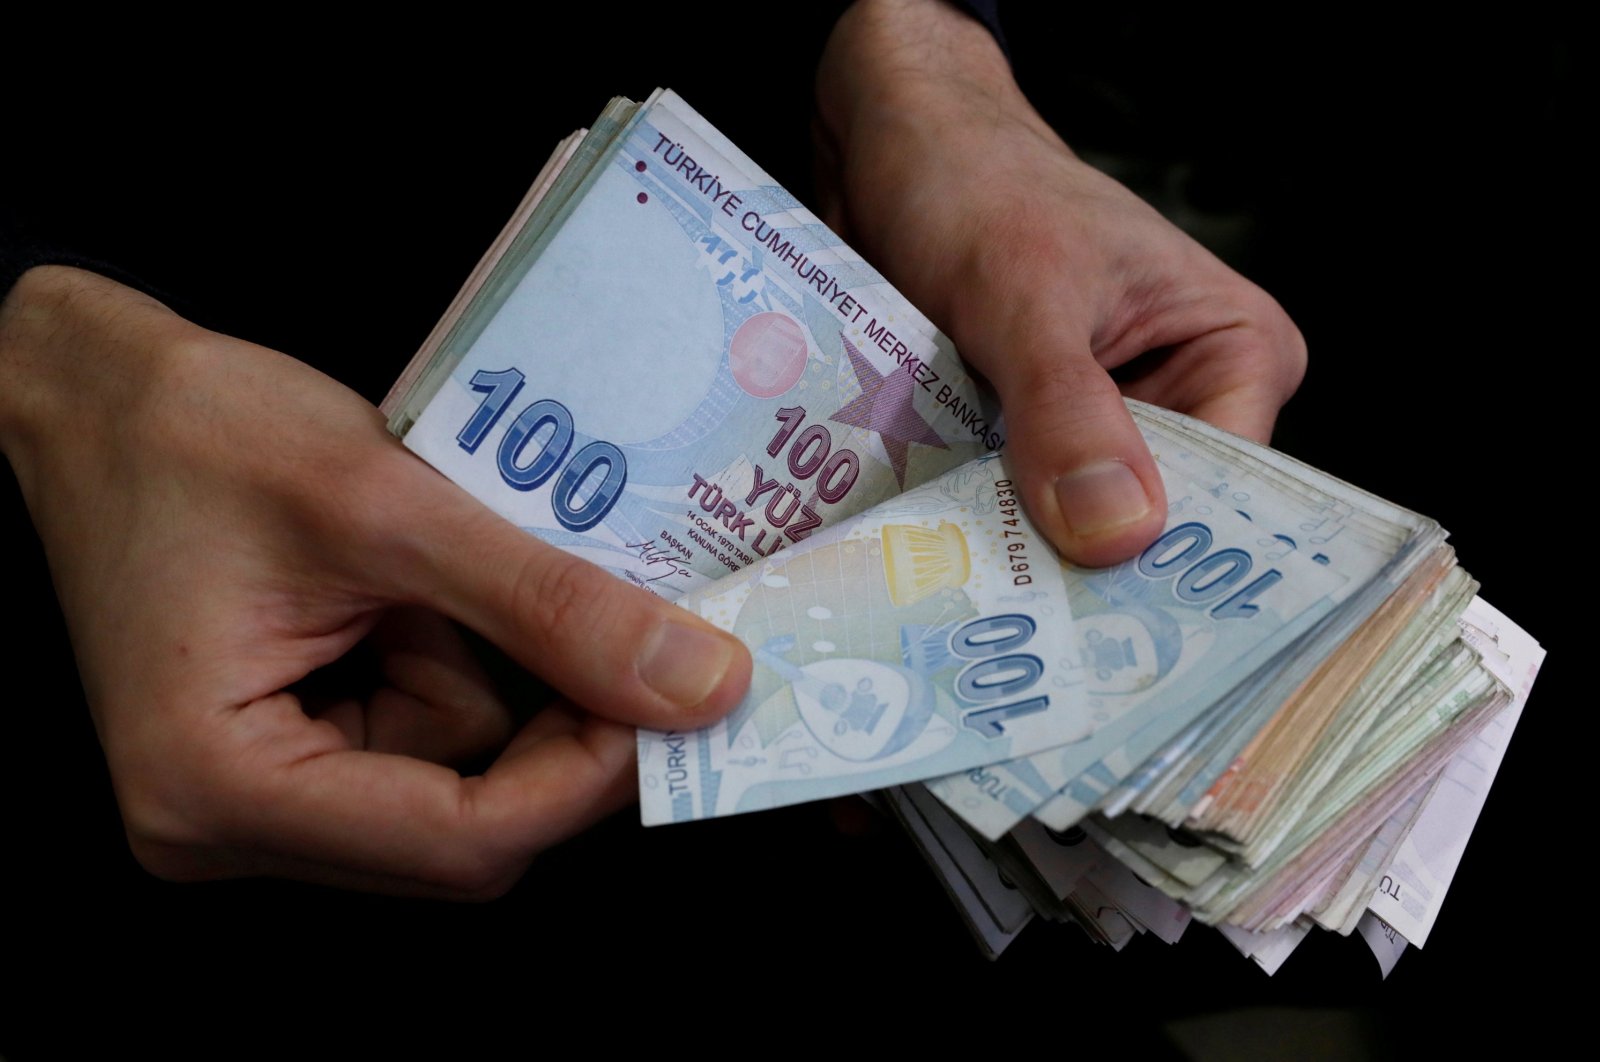 Dolar, euro kehilangan 10% lebih banyak nilainya terhadap lira Turkish